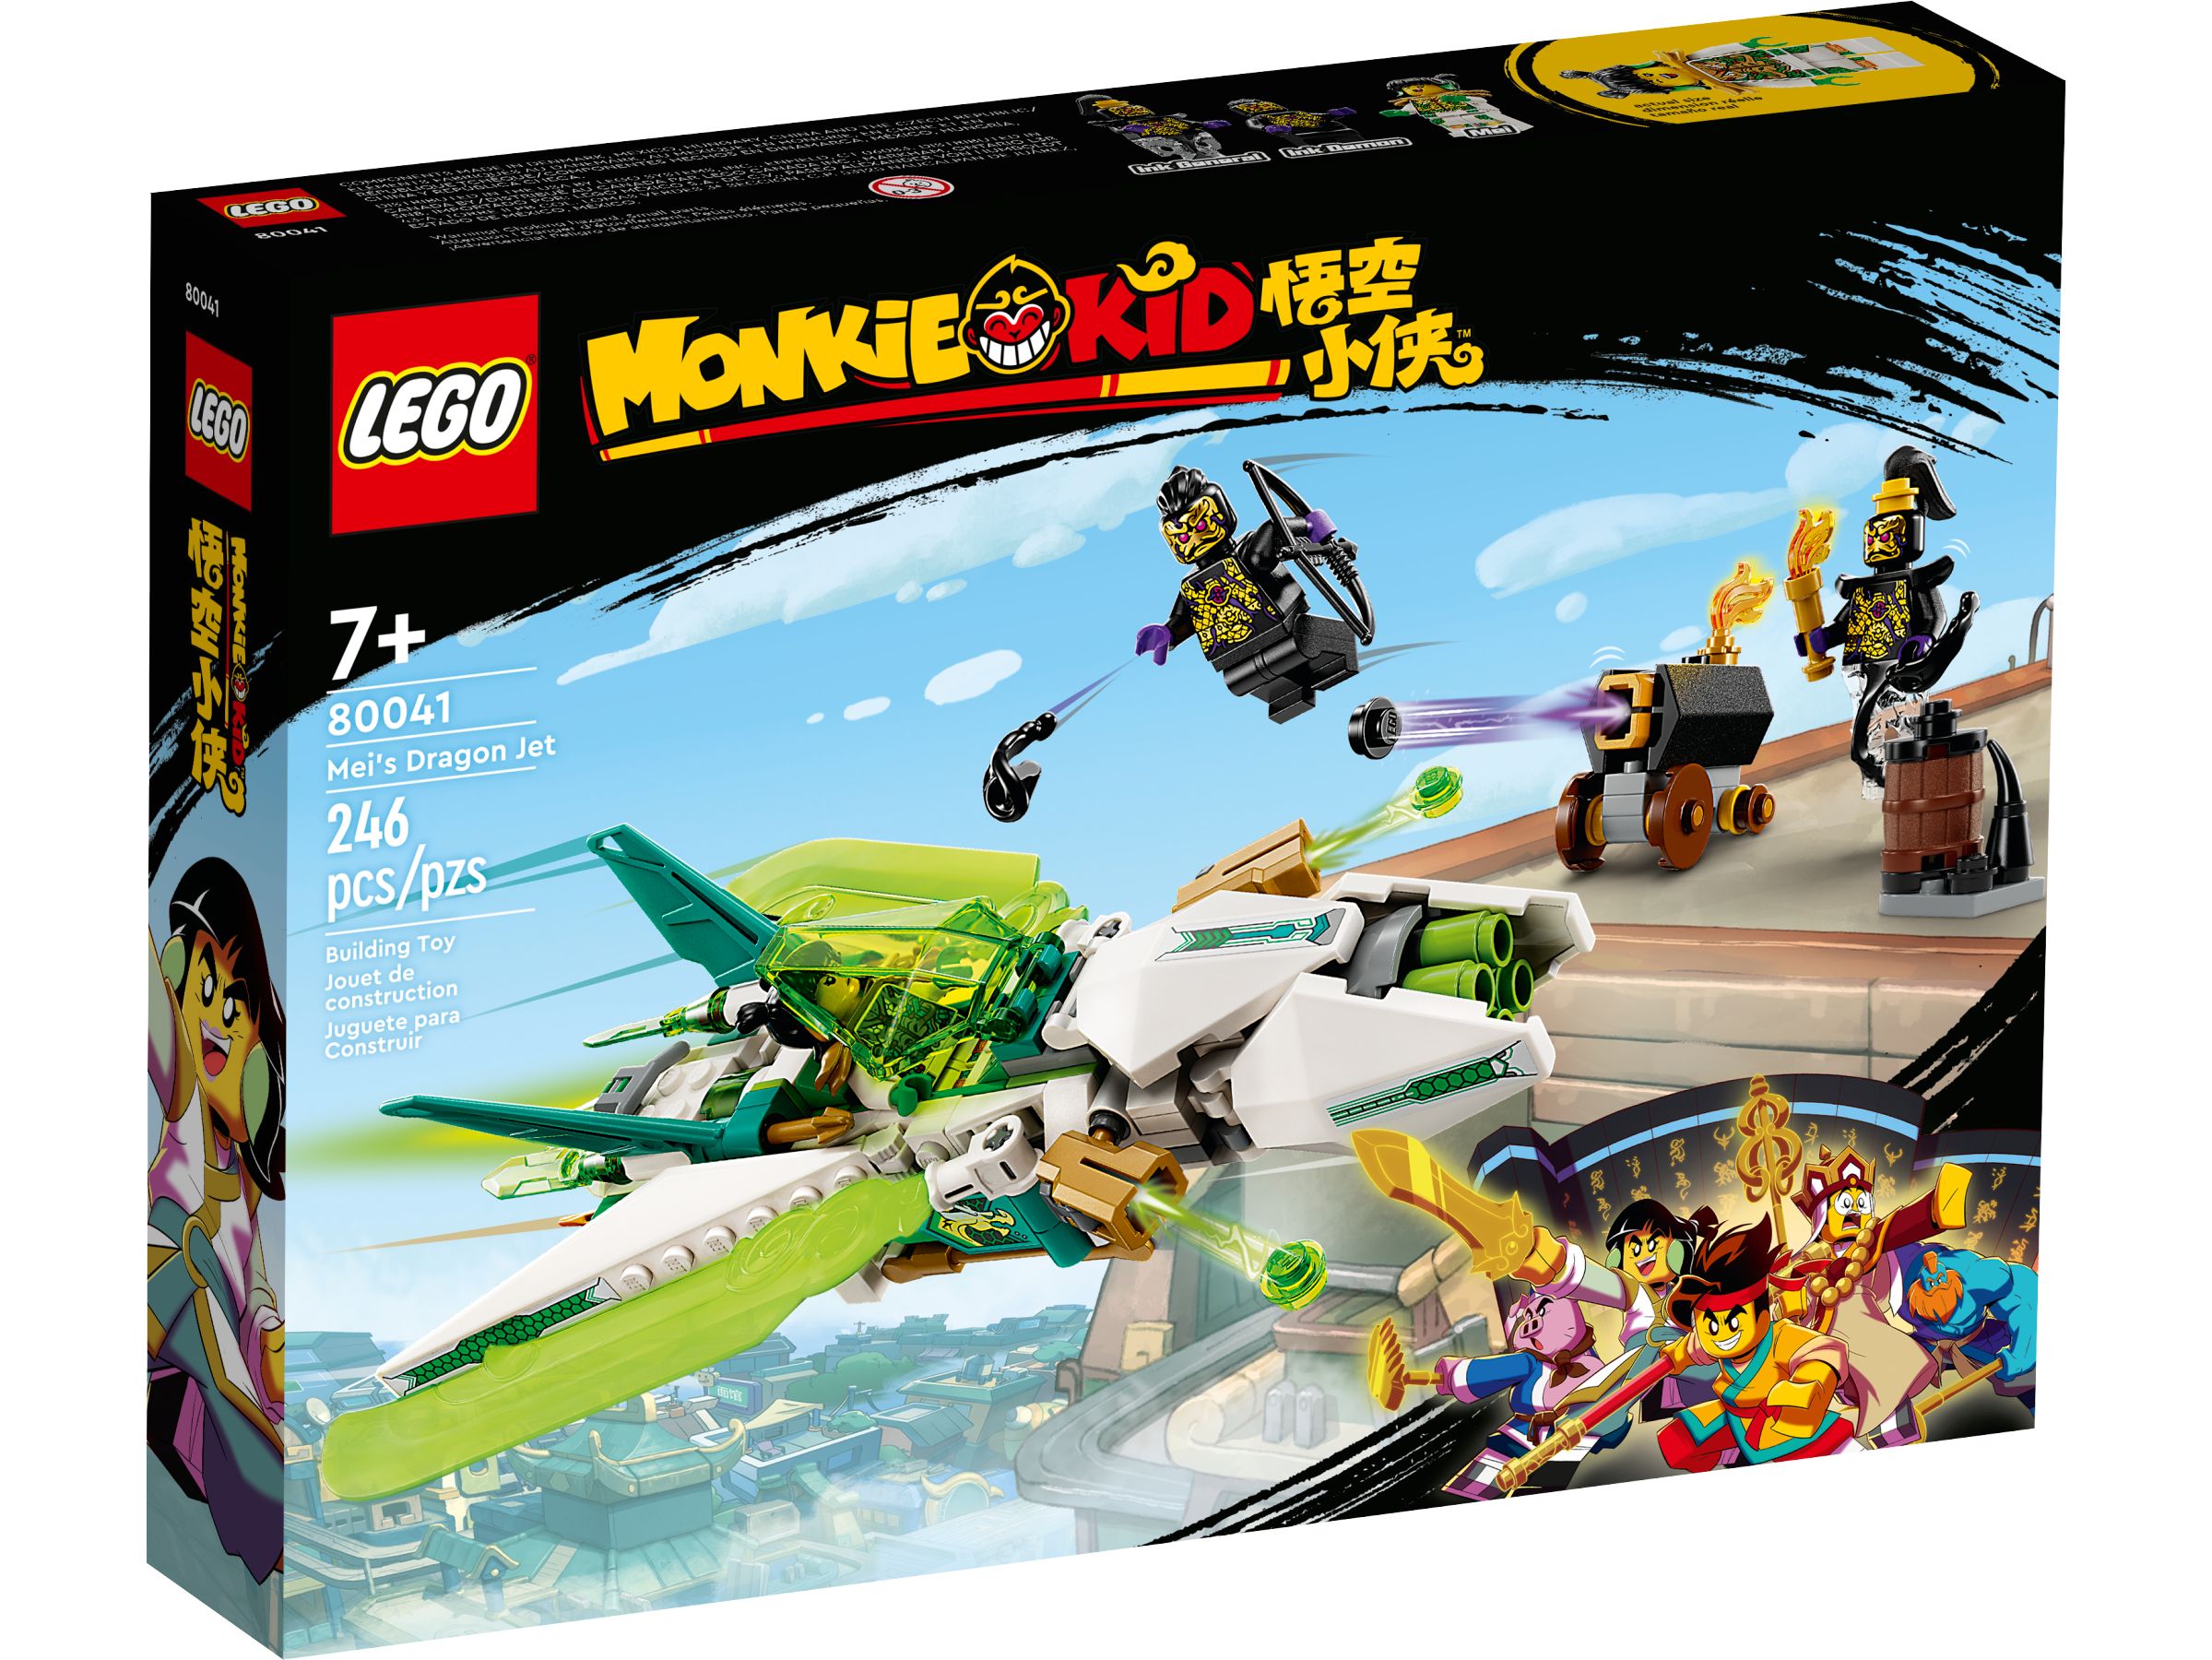 LEGO Monkie Kid 80041 Meis Drachen-Jet LEGO_80041_alt1.jpg